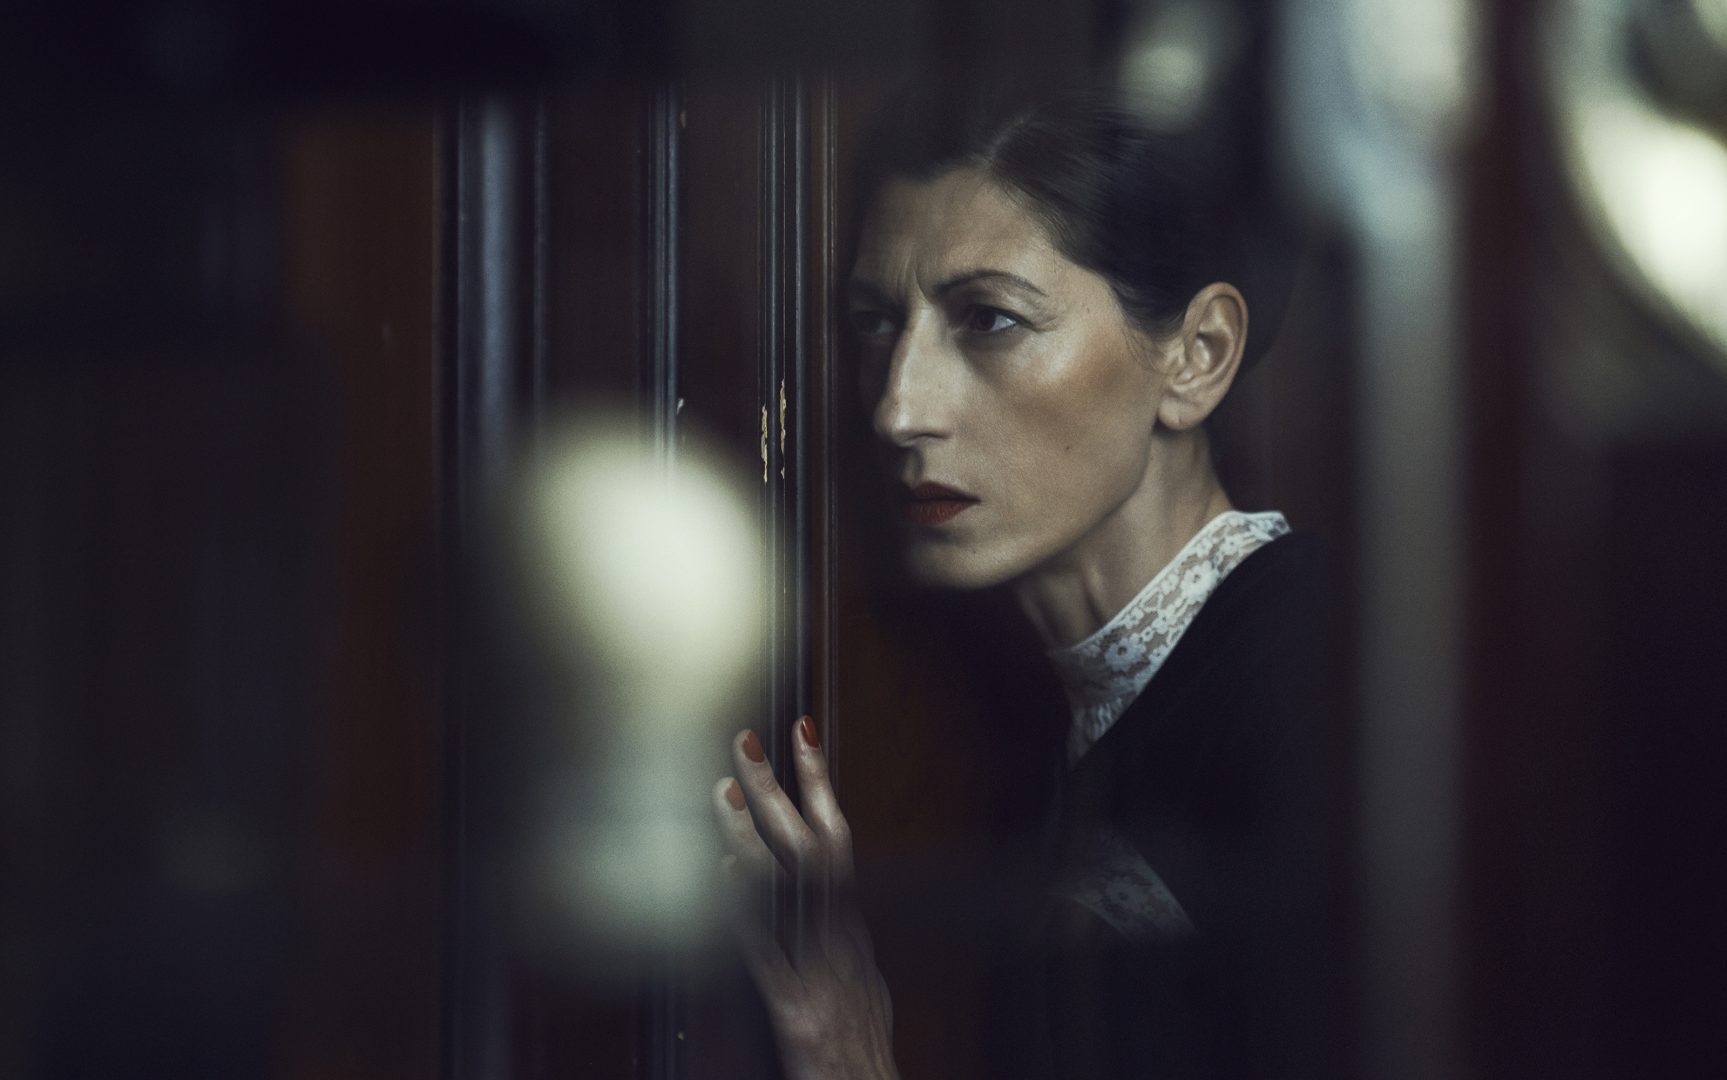 Women listen to conversation at door by Stefan Rappo